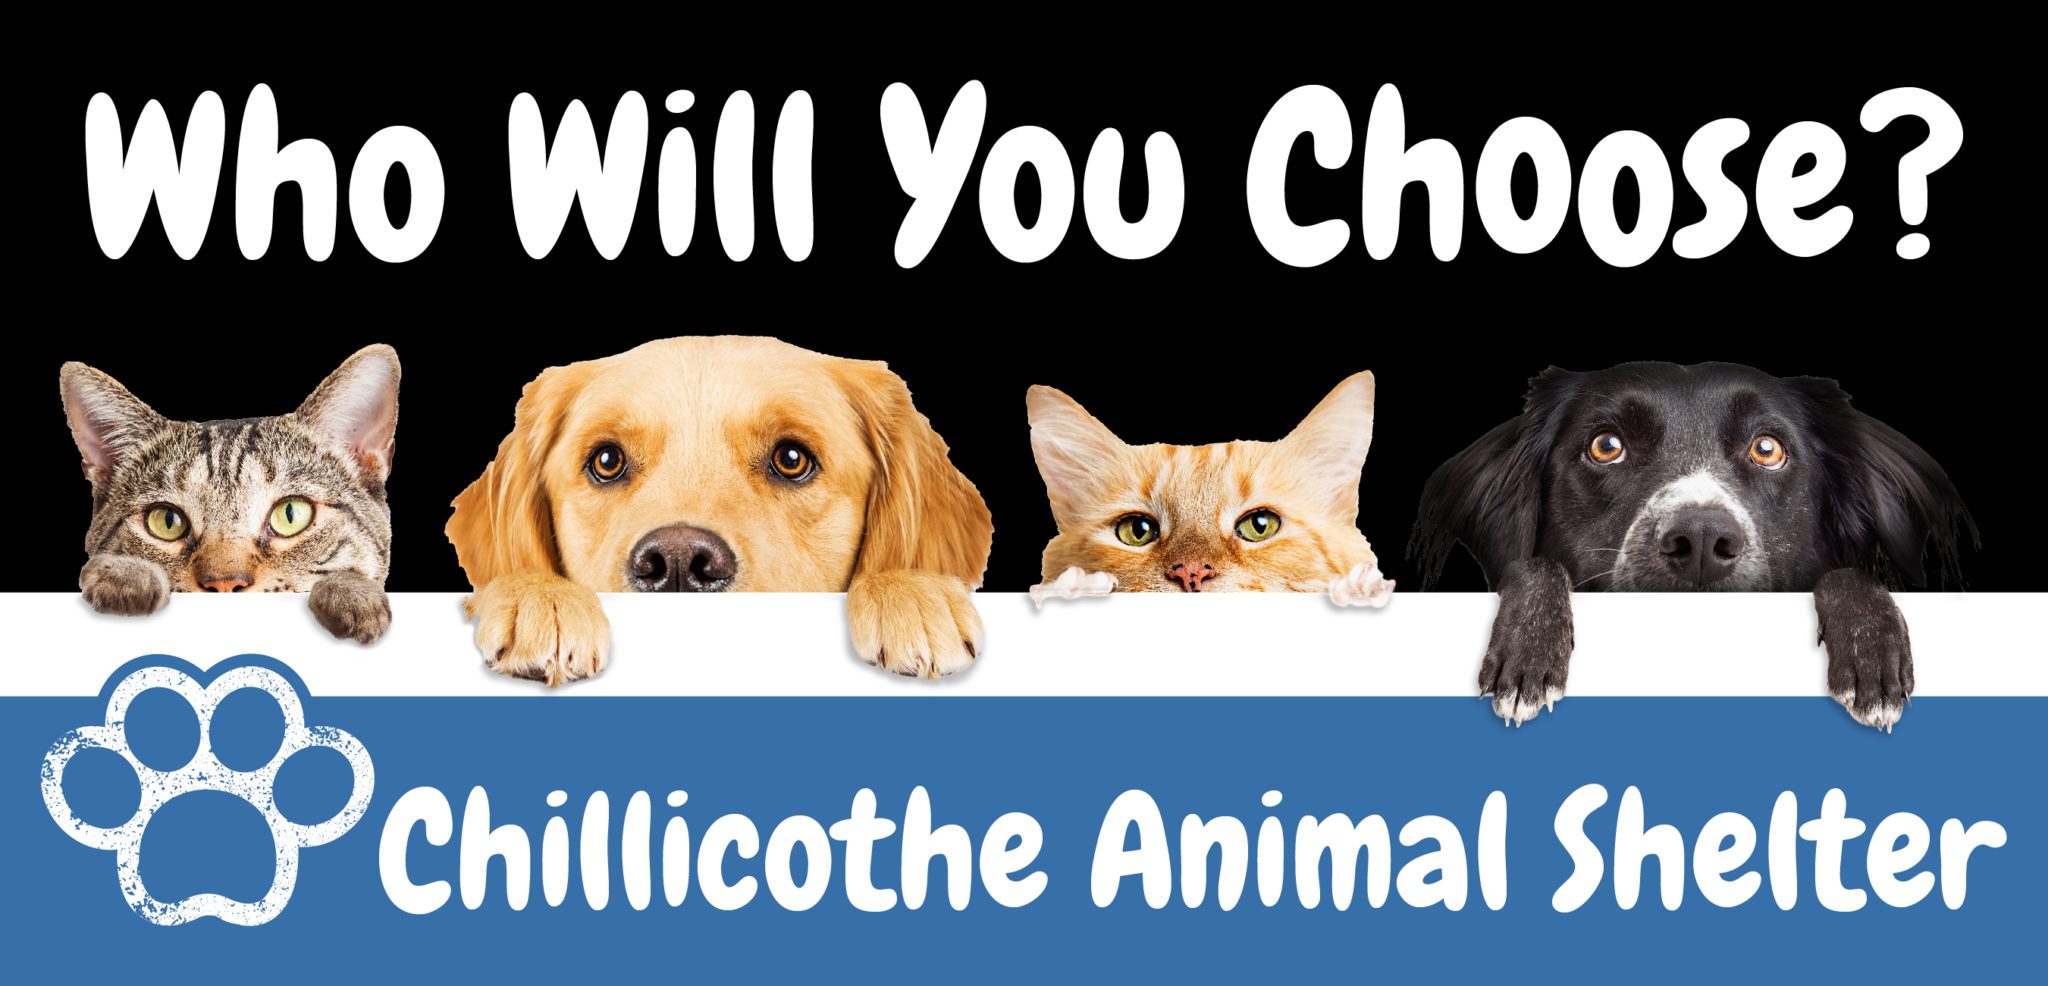 Digital billboard ad for Chillicothe Animal Shelter